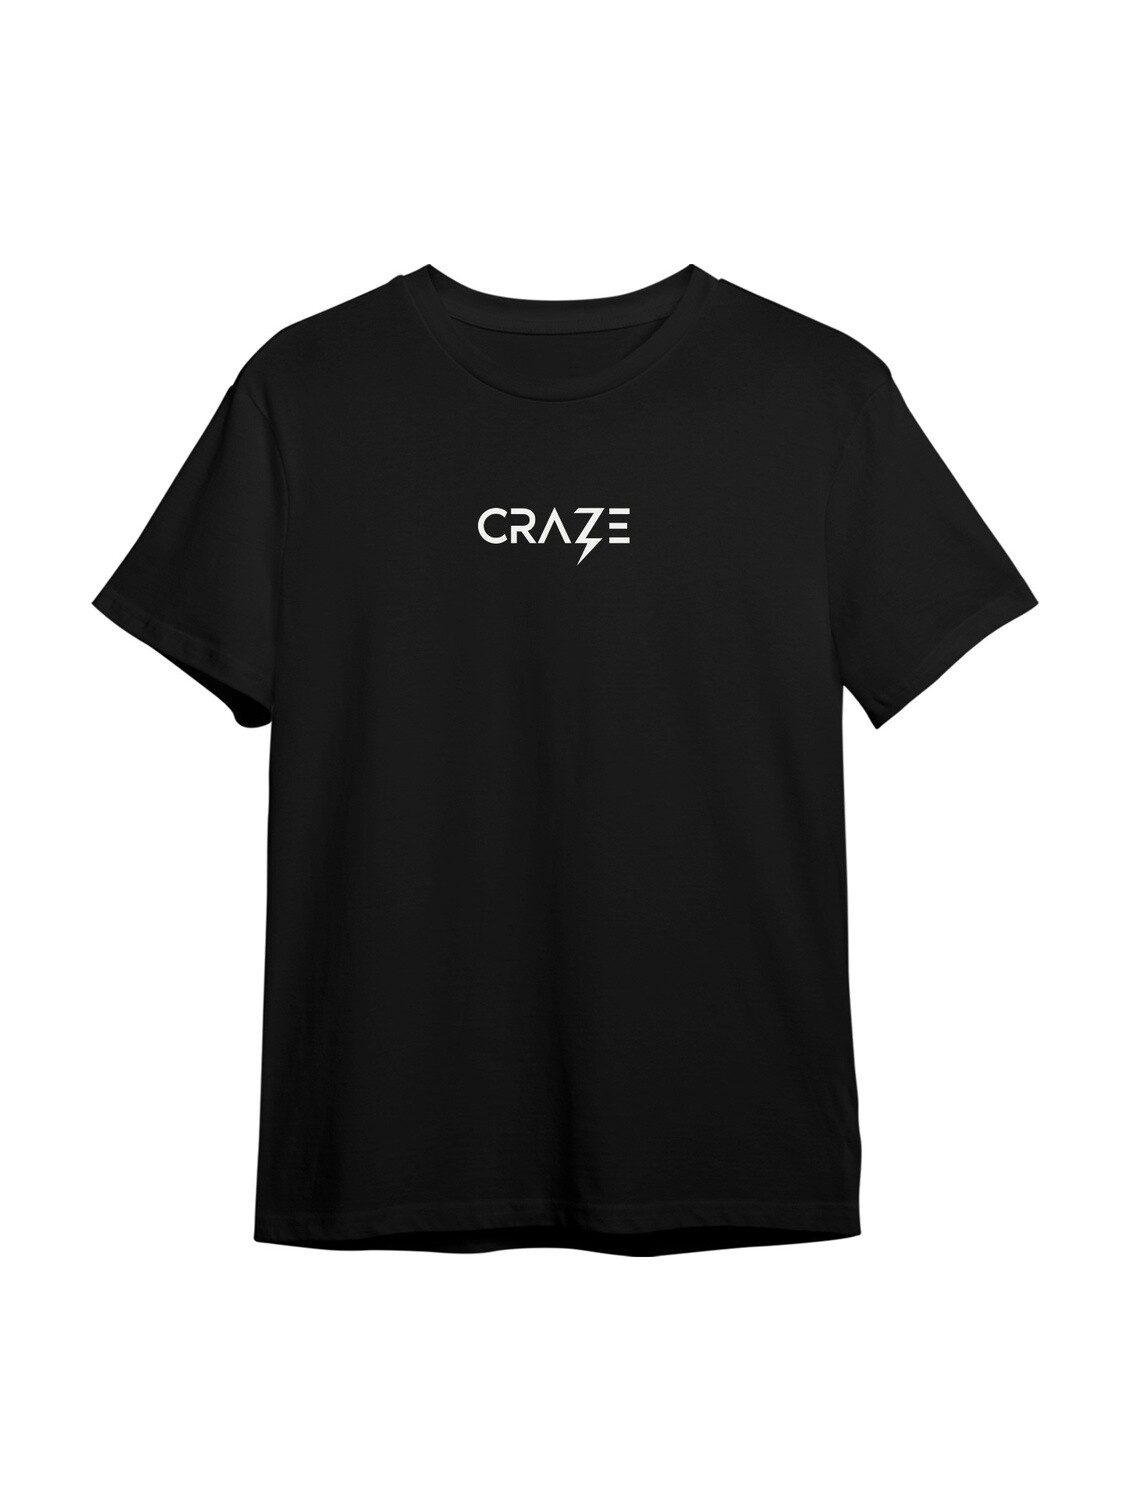 T-shirt CRAZE by Farfadet, Colour: Black, Size: X-Small